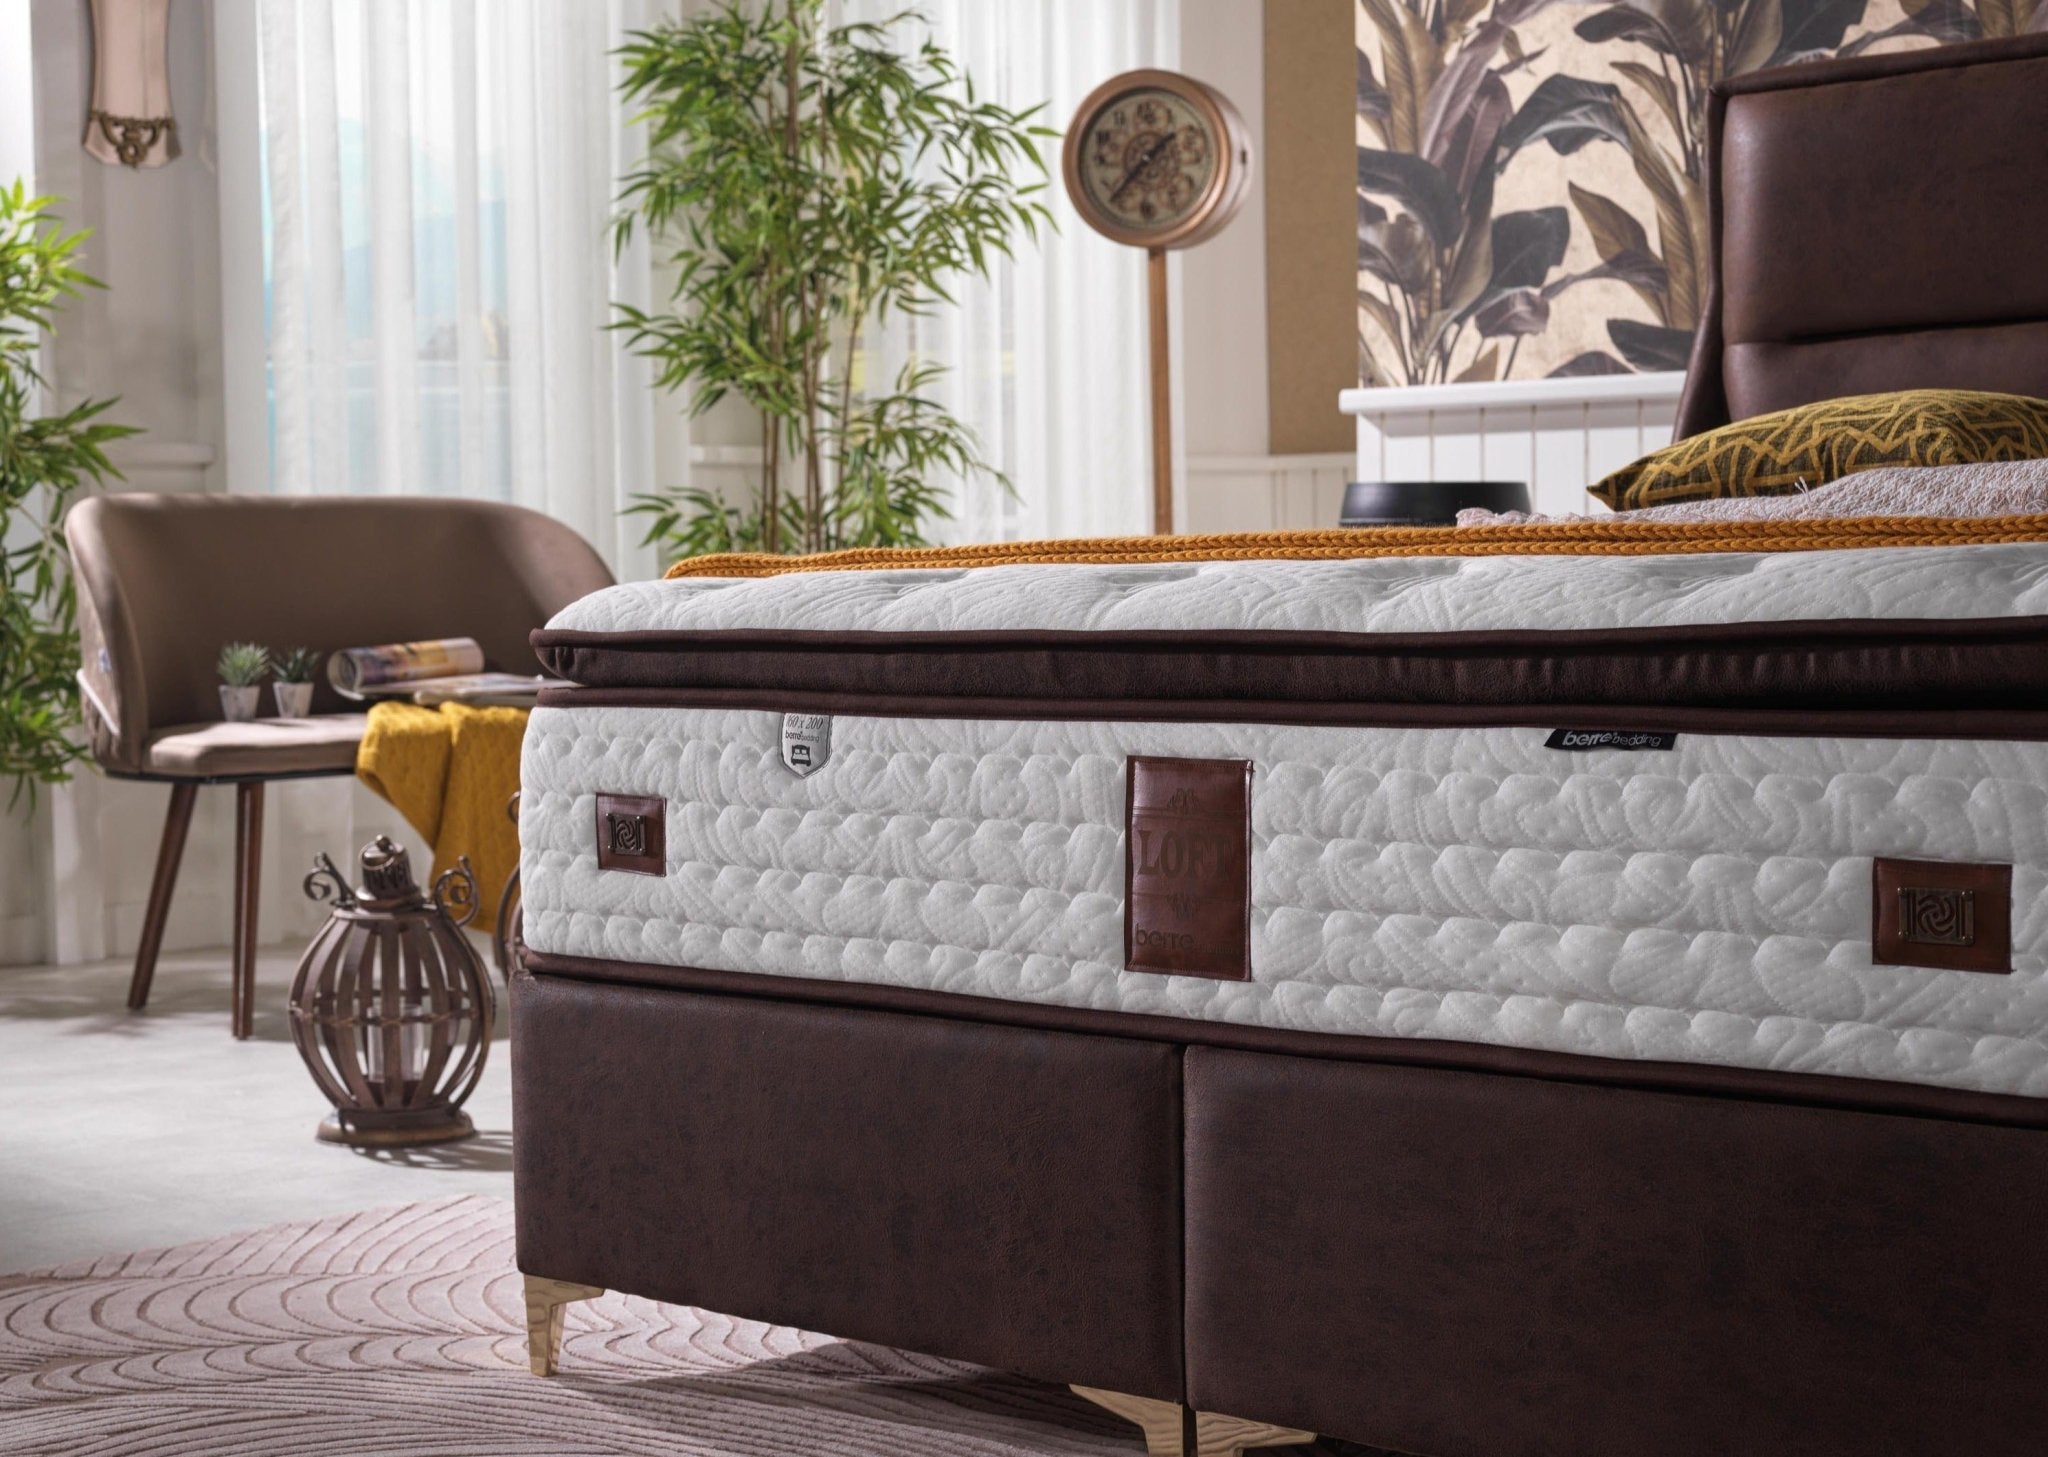 LOFT Bed - Berre Furniture